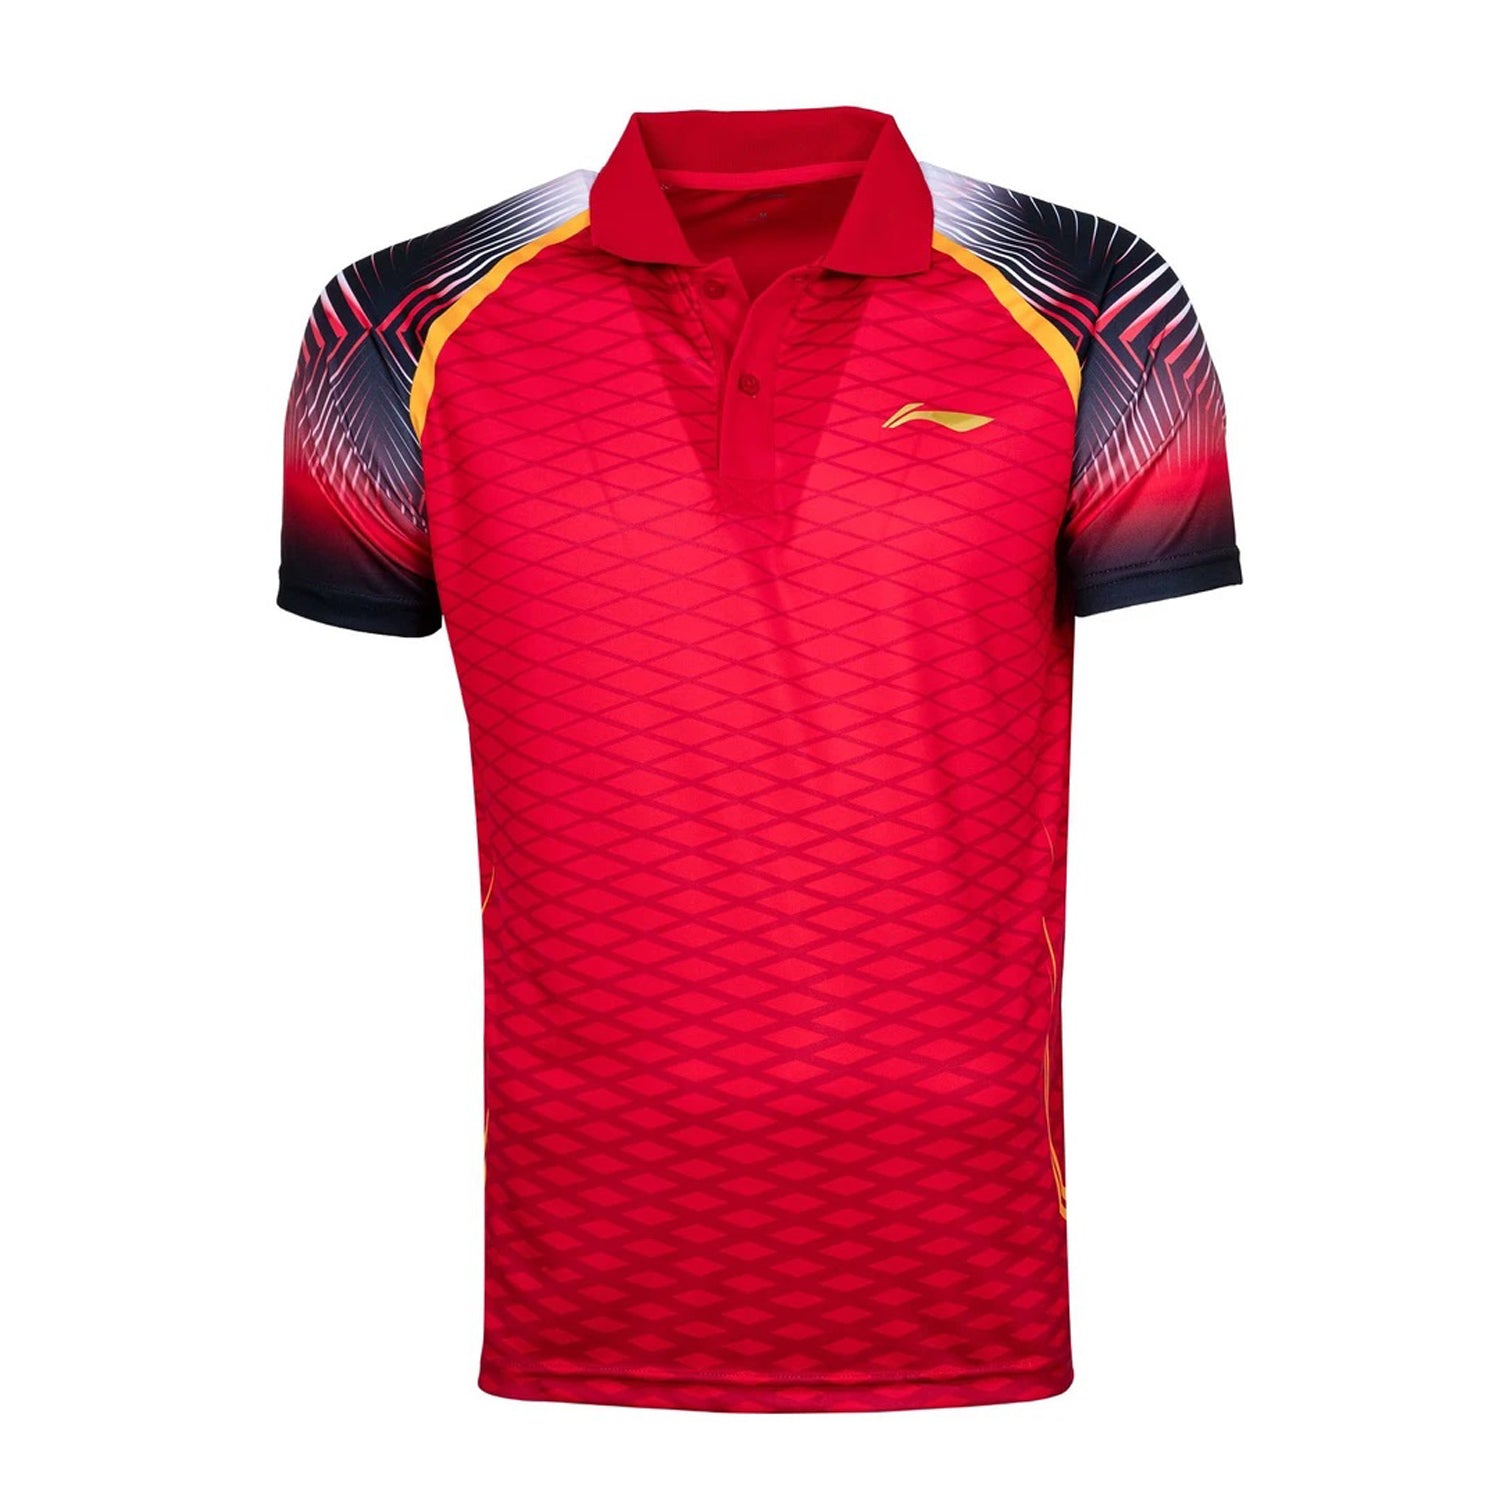 Li-Ning APLR291 Polo Neck Badminton Tshirt, Red - Best Price online Prokicksports.com